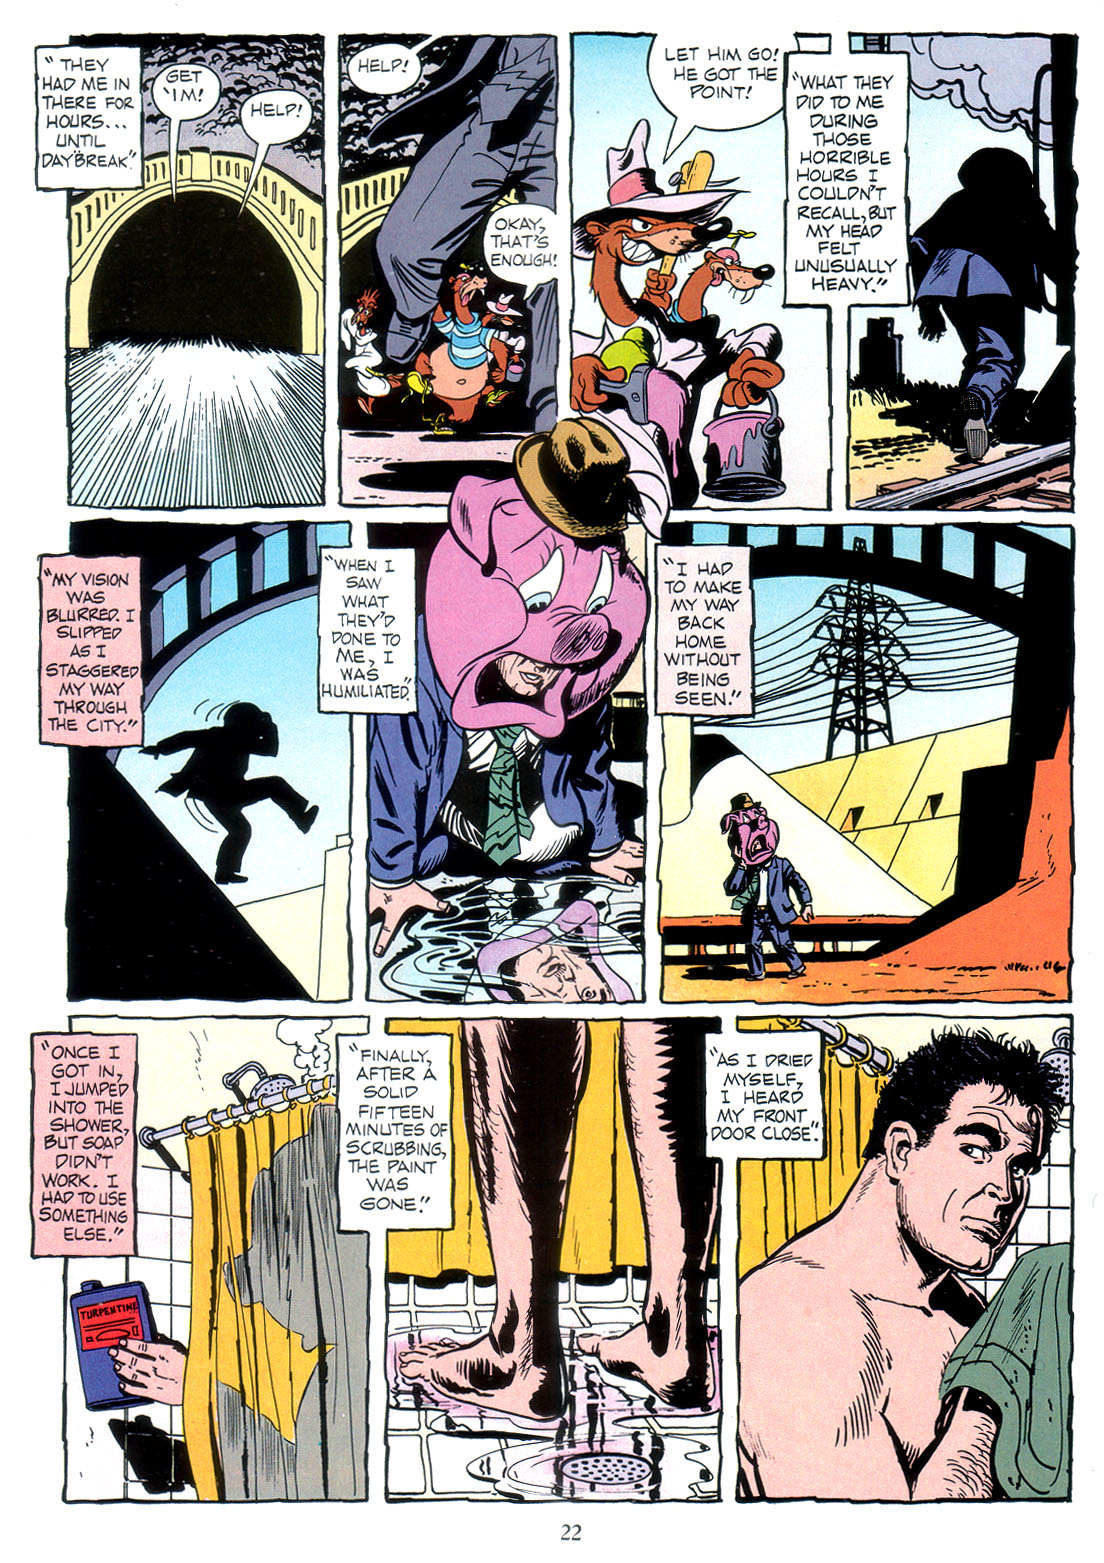 Marvel Graphic Novel issue 41 - Who Framed Roger Rabbit - Page 24